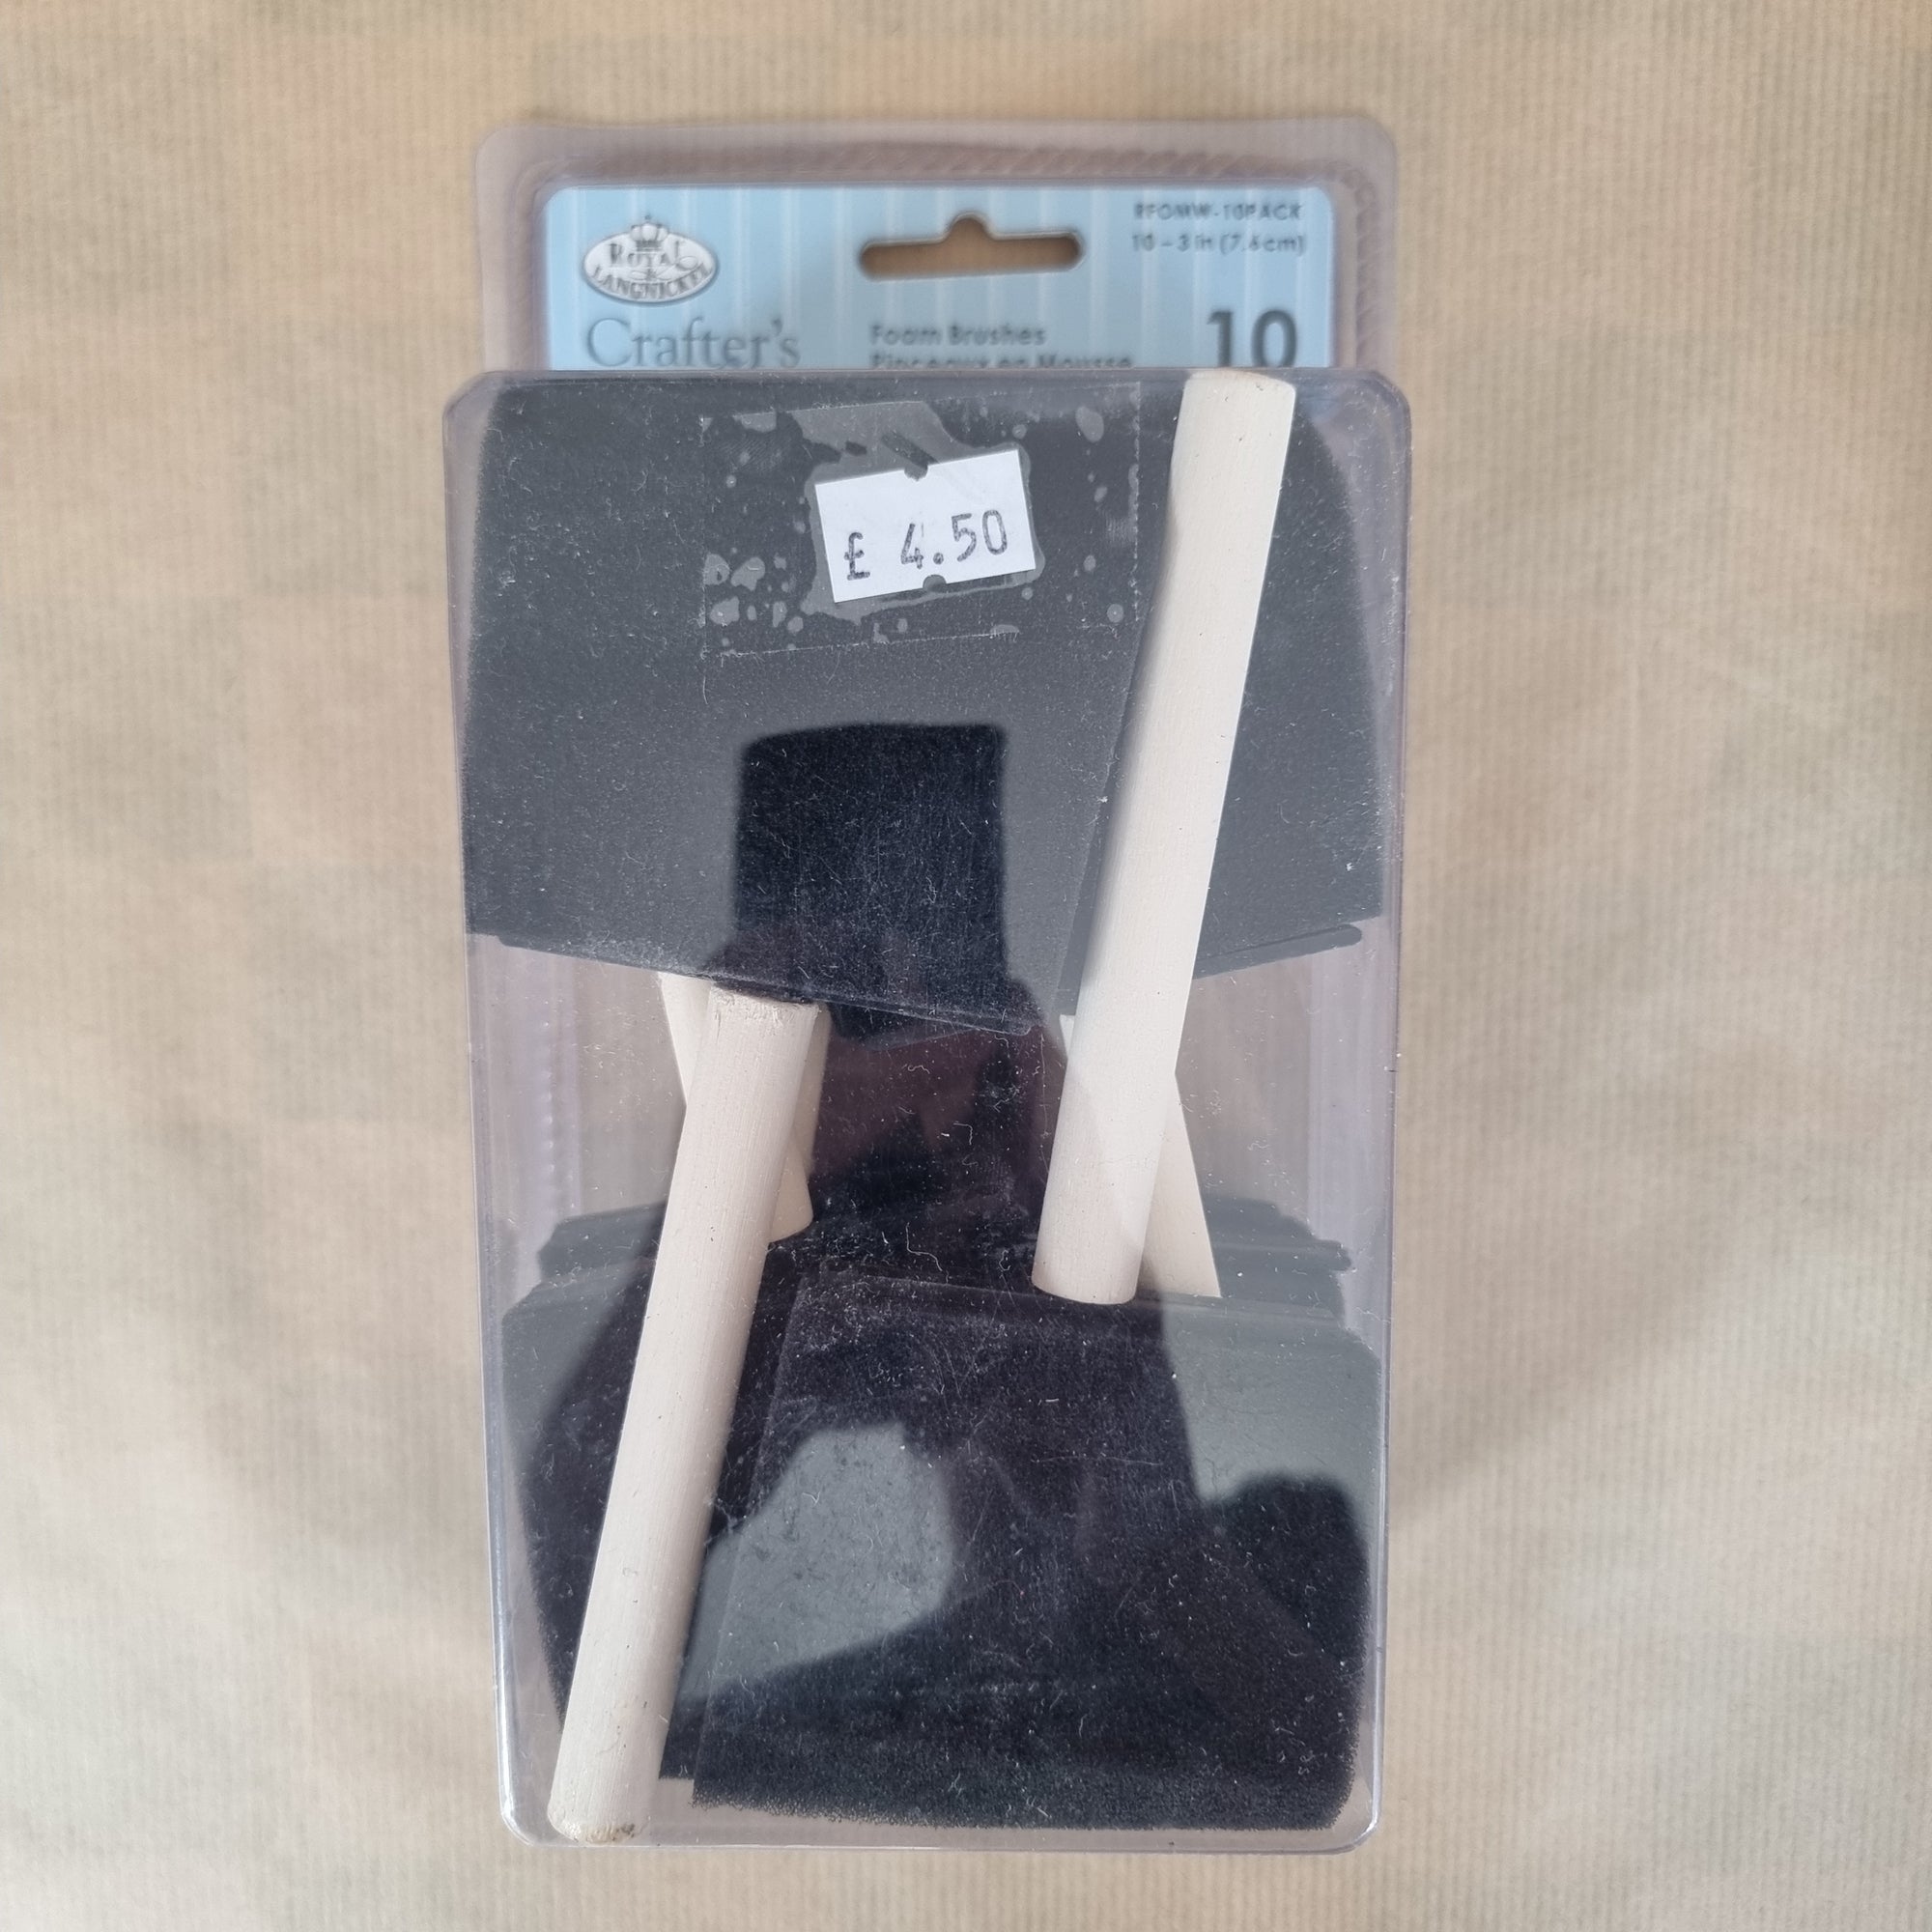 Crafter's Choice Rectangular Black Sponge Brushes